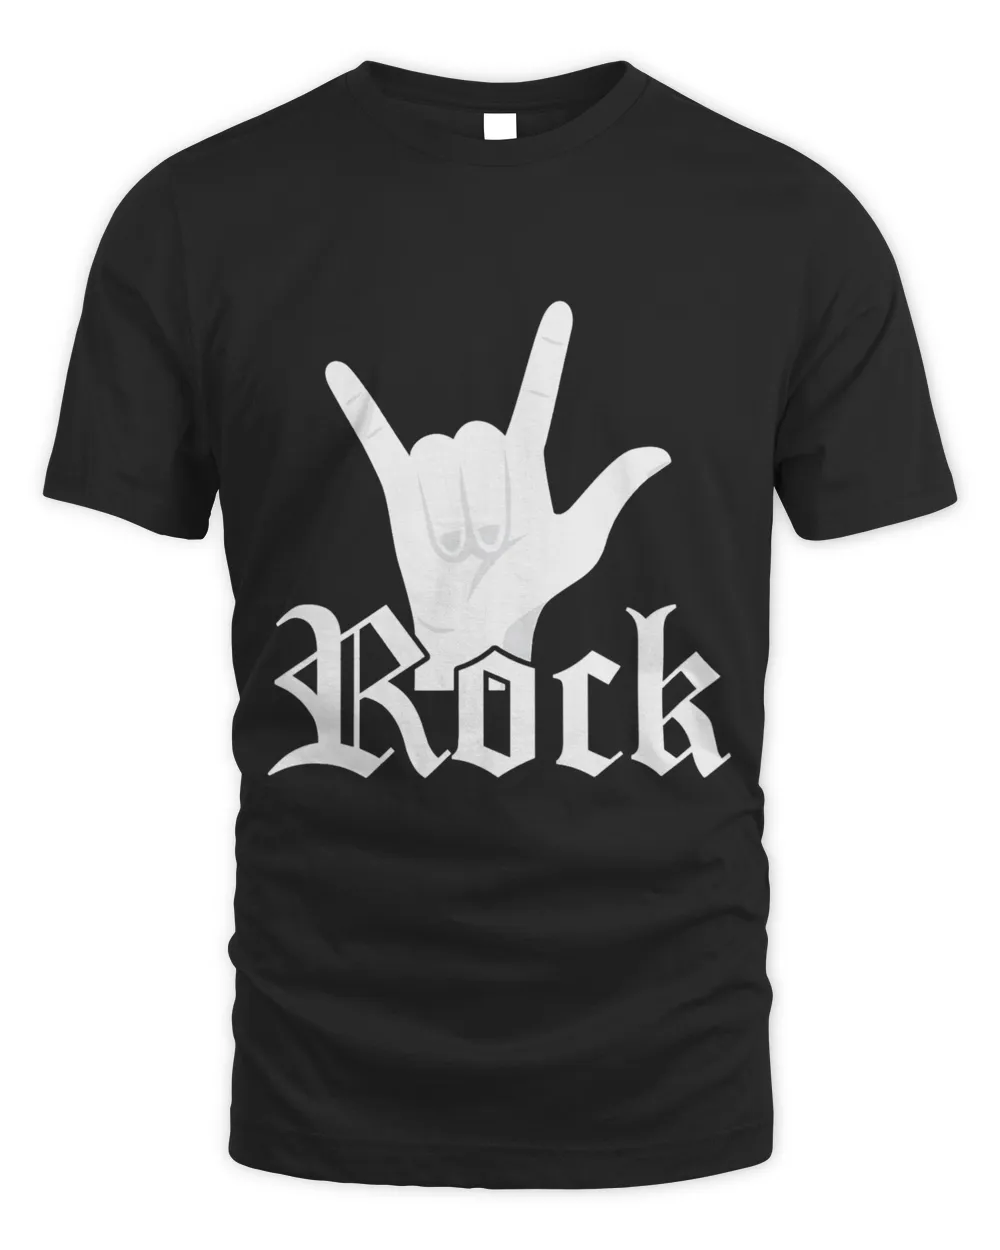 Cool Rock Hand Symbol Popular Rock Singer Music Lover